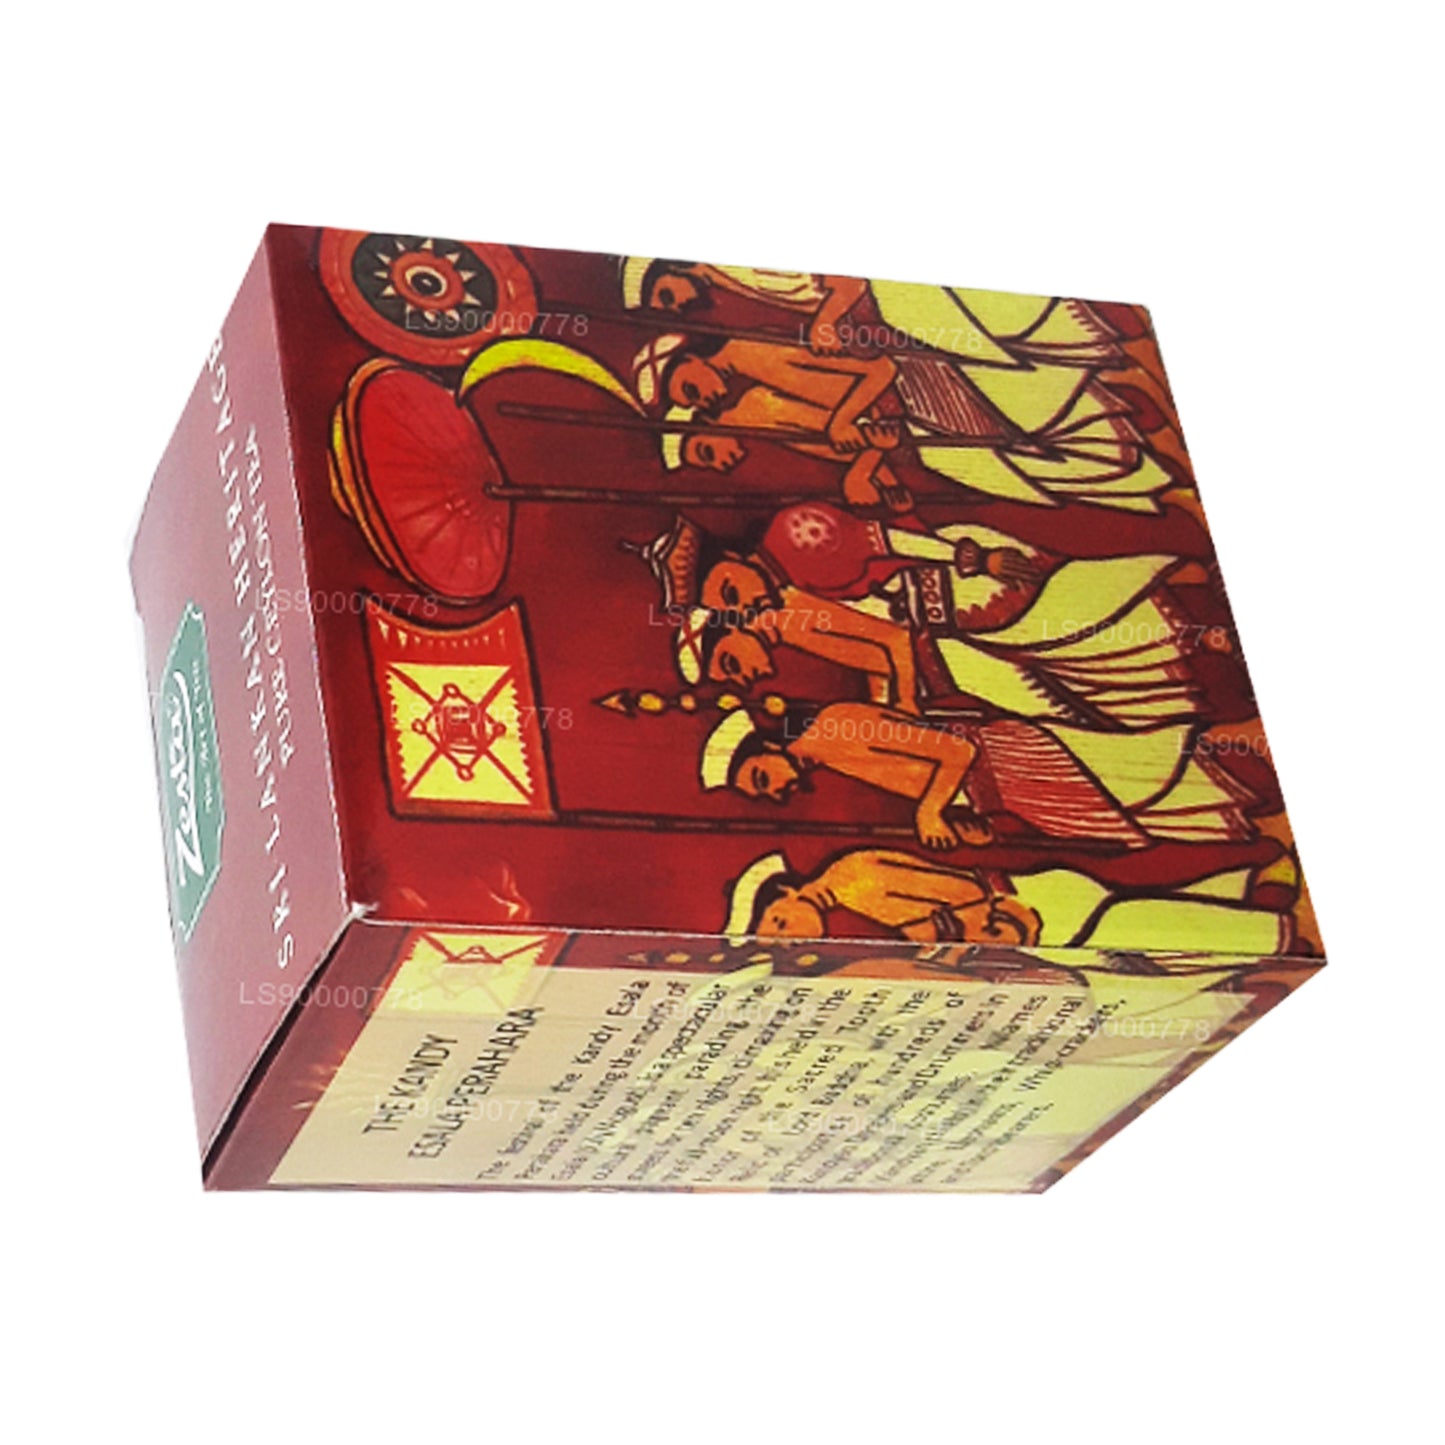 Zesta Sri Lankan Heritage Pure Ceylon Tea Kenilworth PEKOE 1 (100g)